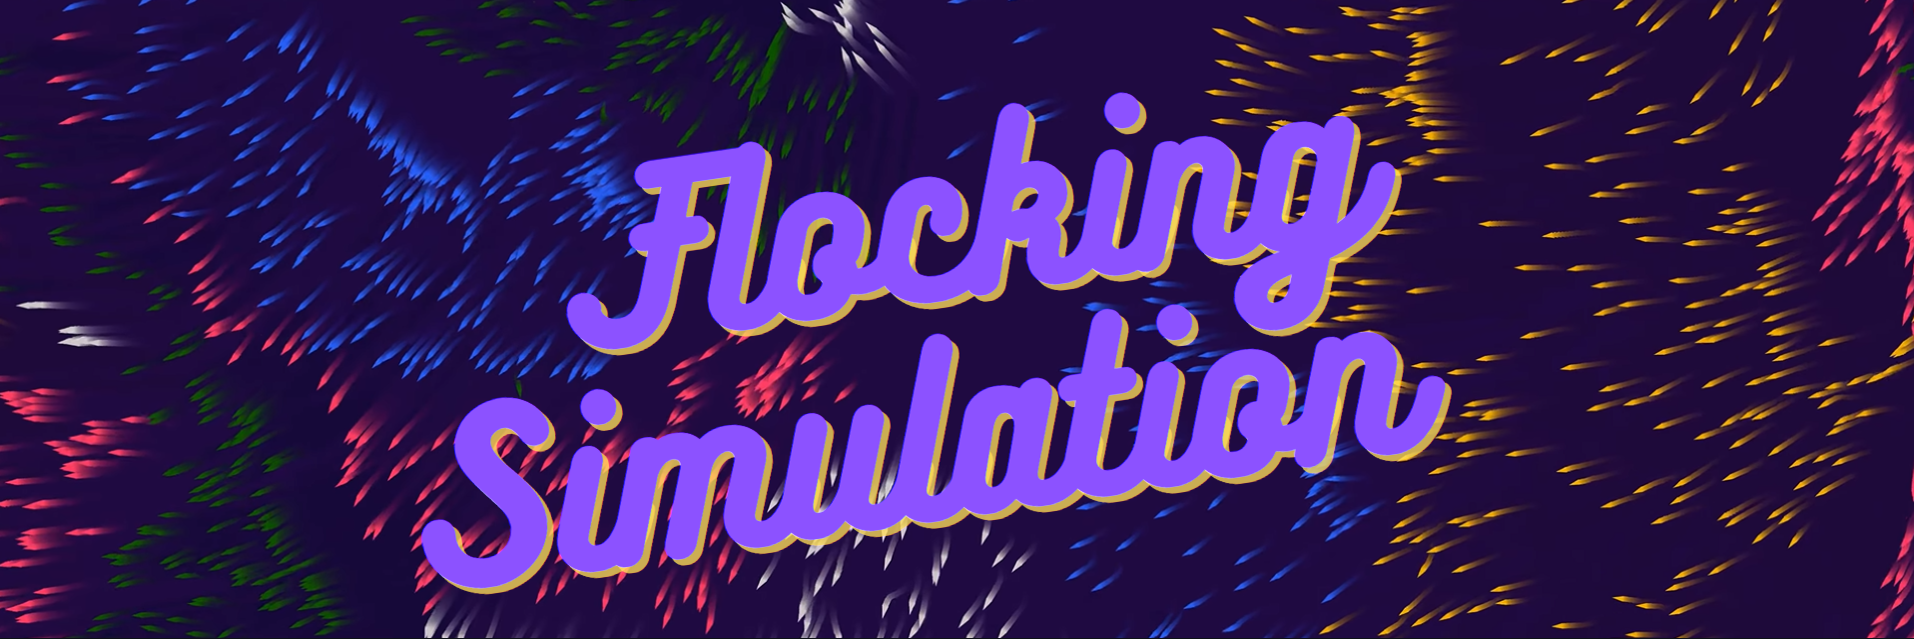 Flocking Simulation Banner